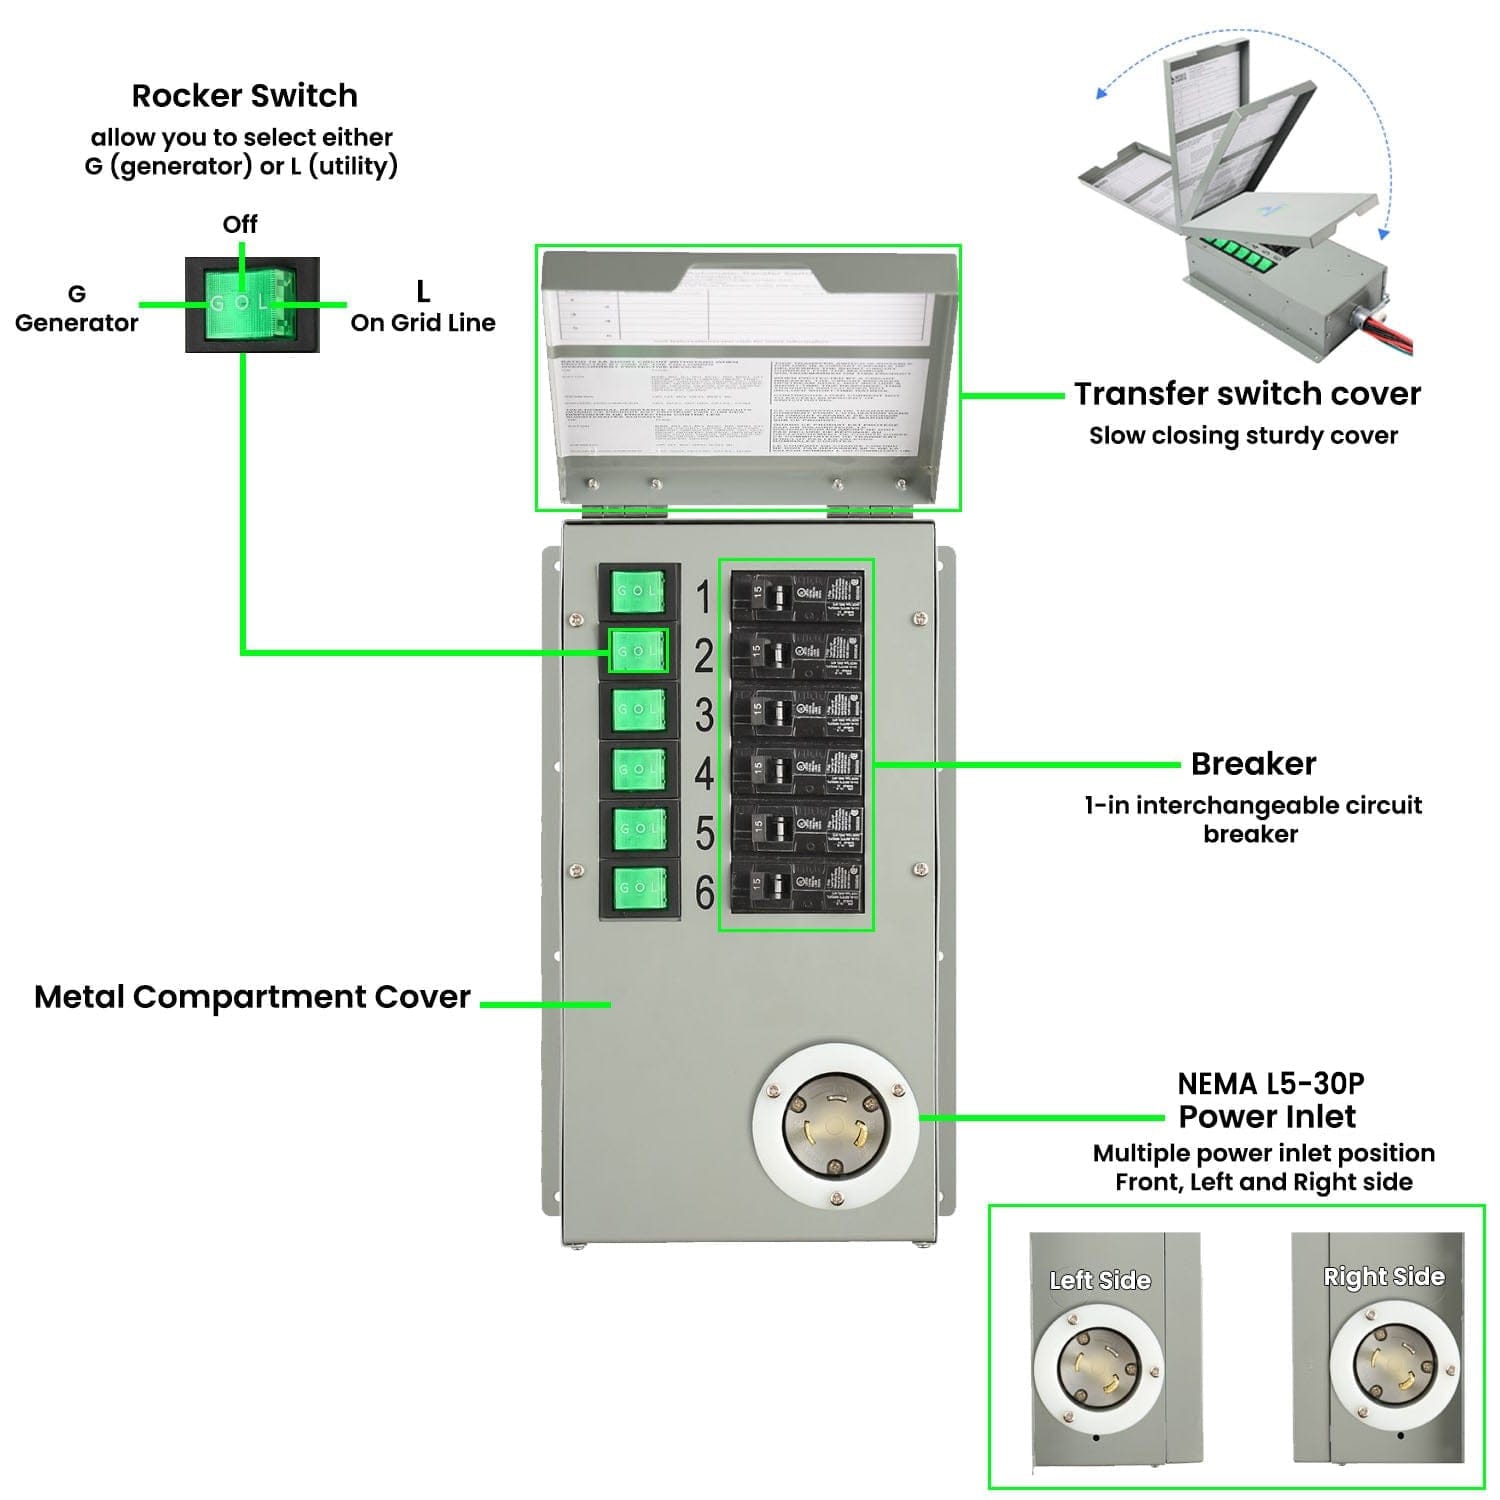 Nature's Generator Power Transfer Switch Kit - Elite - Nature's Generator